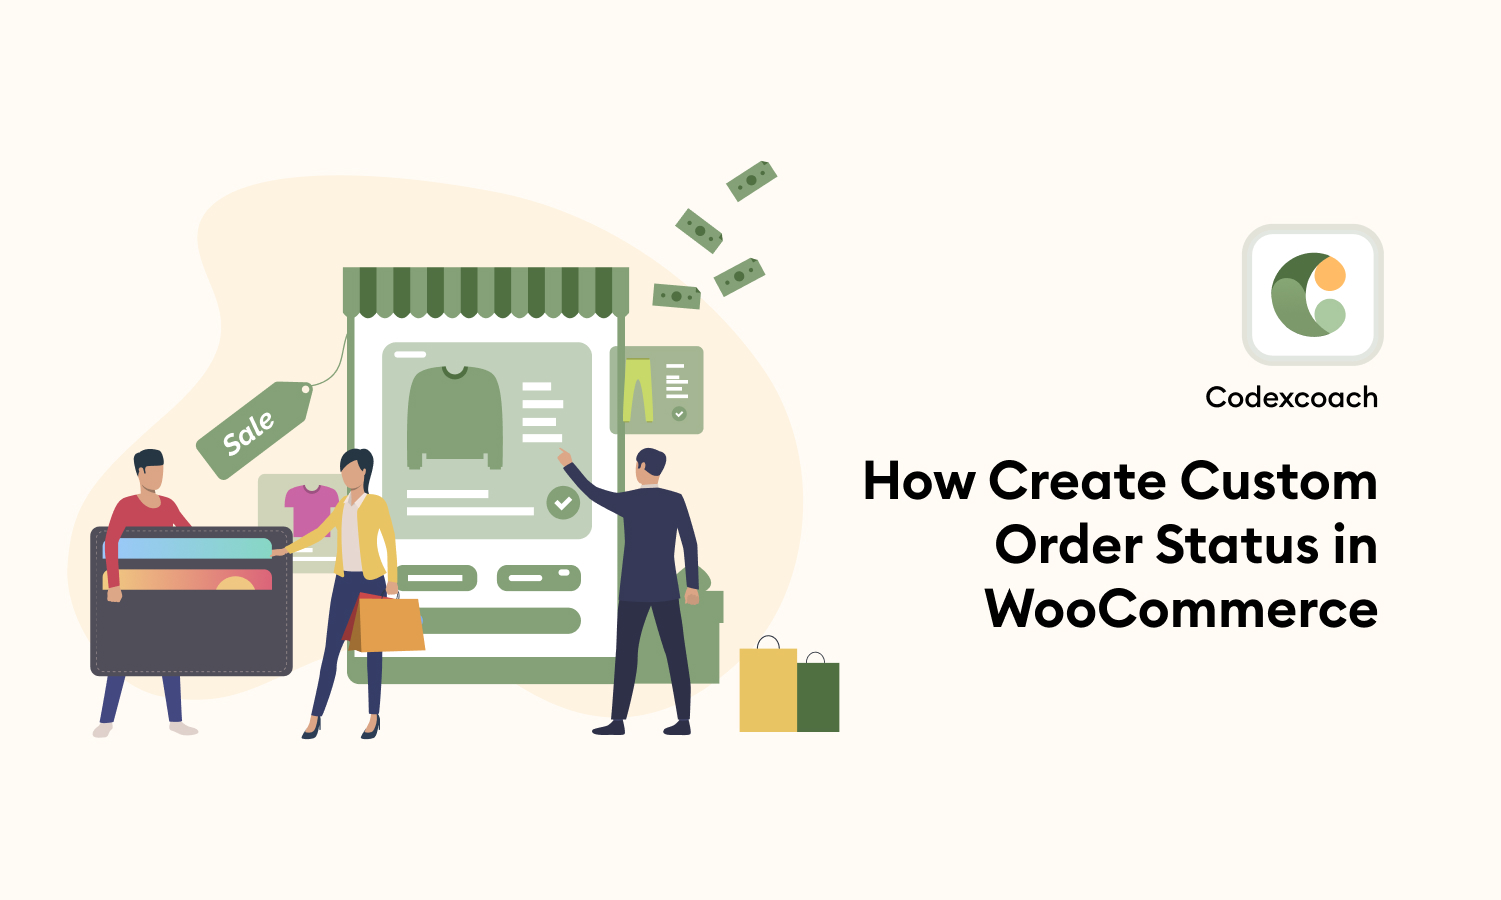 How Create Custom Order Status in WooCommerce